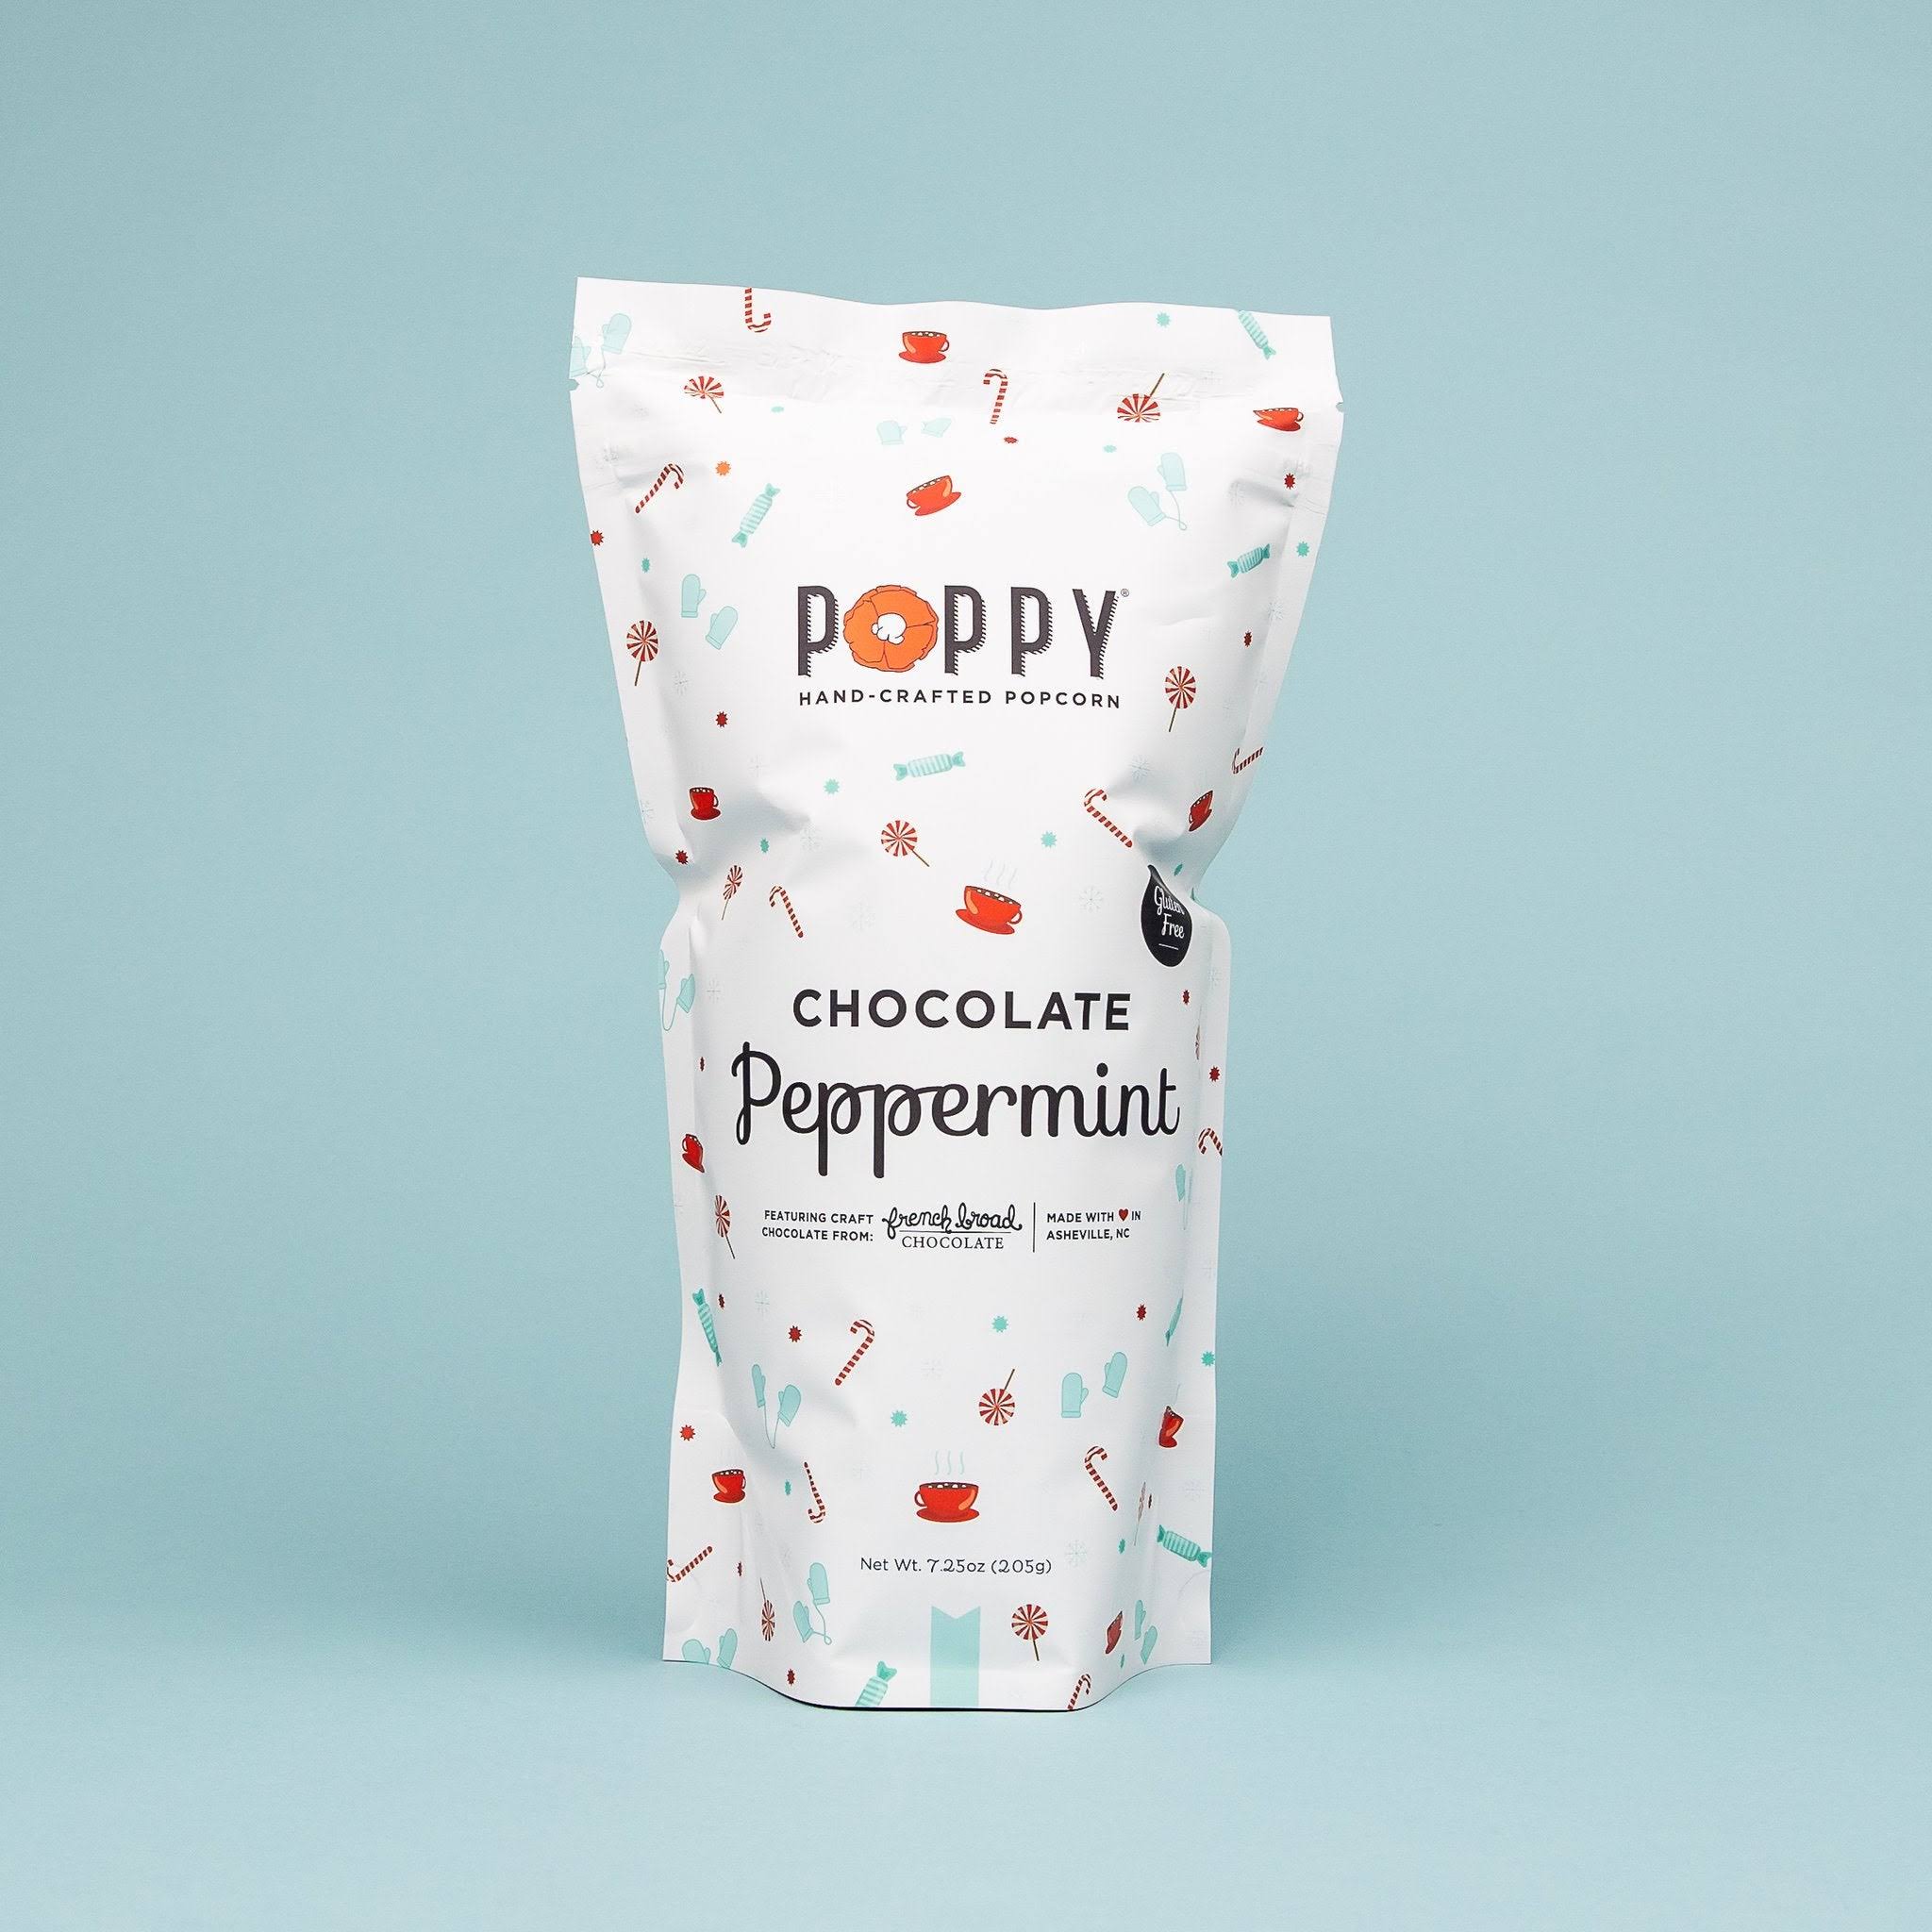 Poppy Chocolate Peppermint Popcorn Market Bag